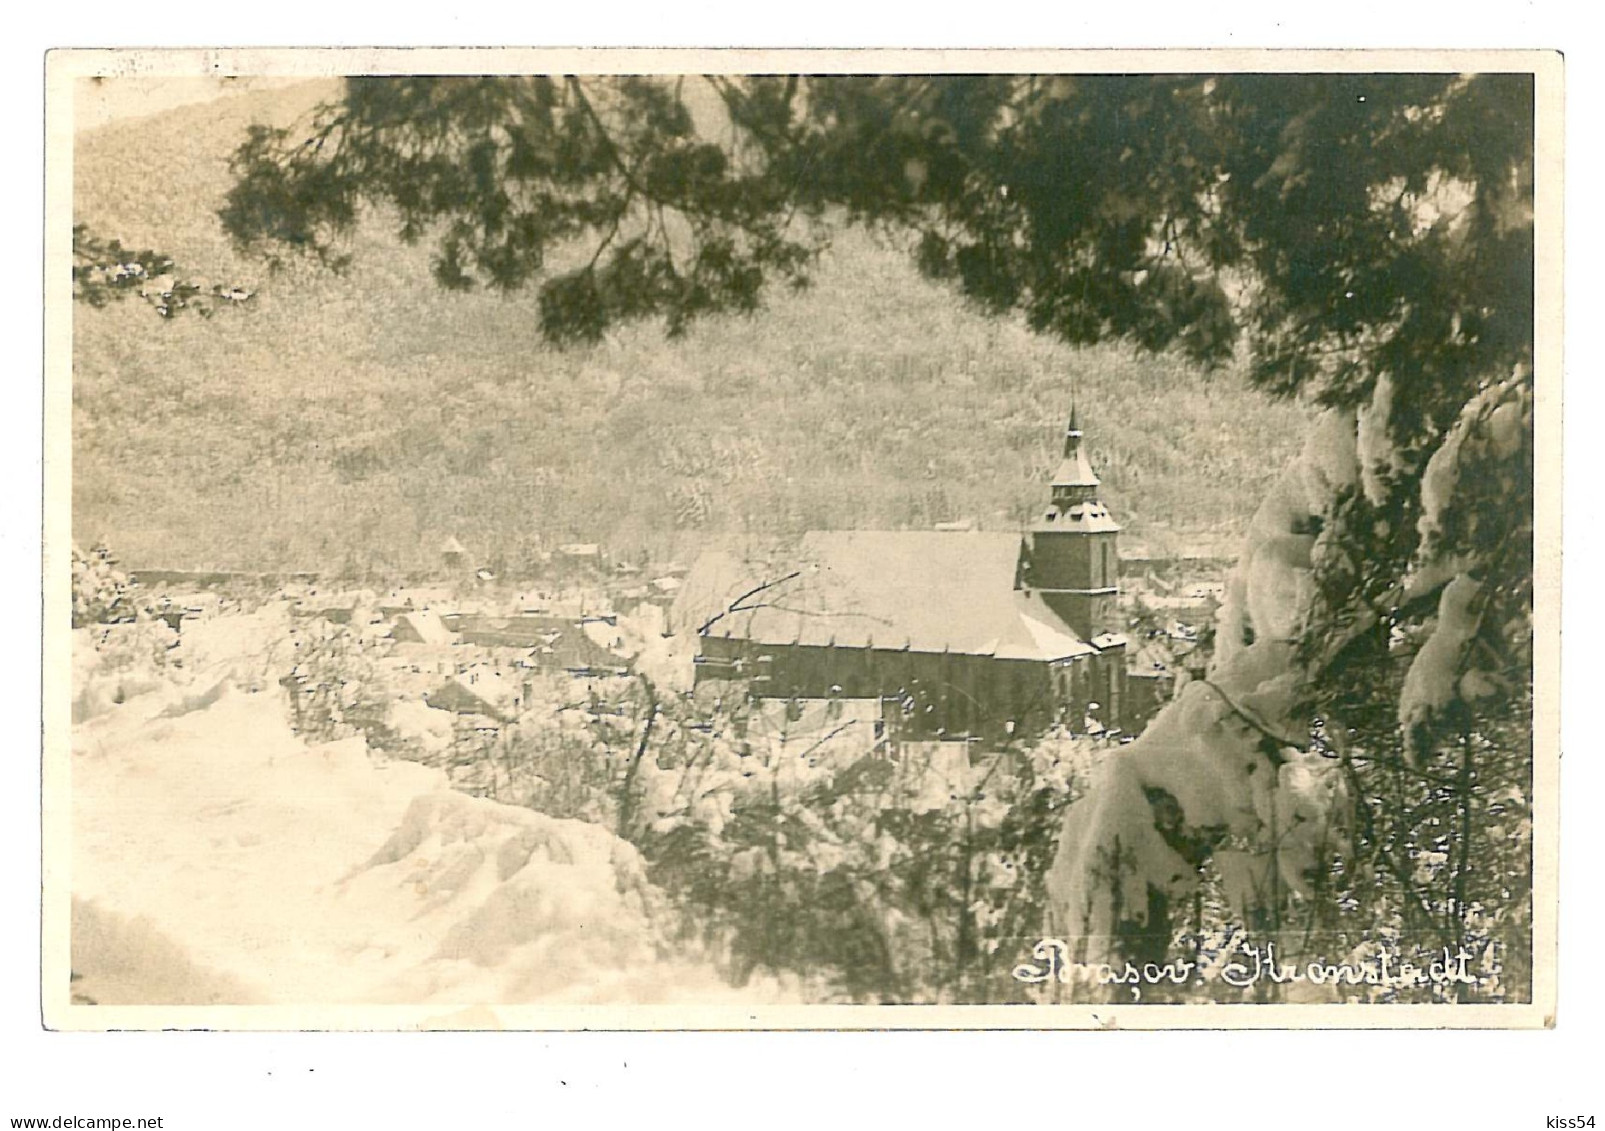 RO 81 - 9568 BRASOV, Winter, Black Church, Romania - Old Postcard, Real PHOTO - Used - 1929 - Romania